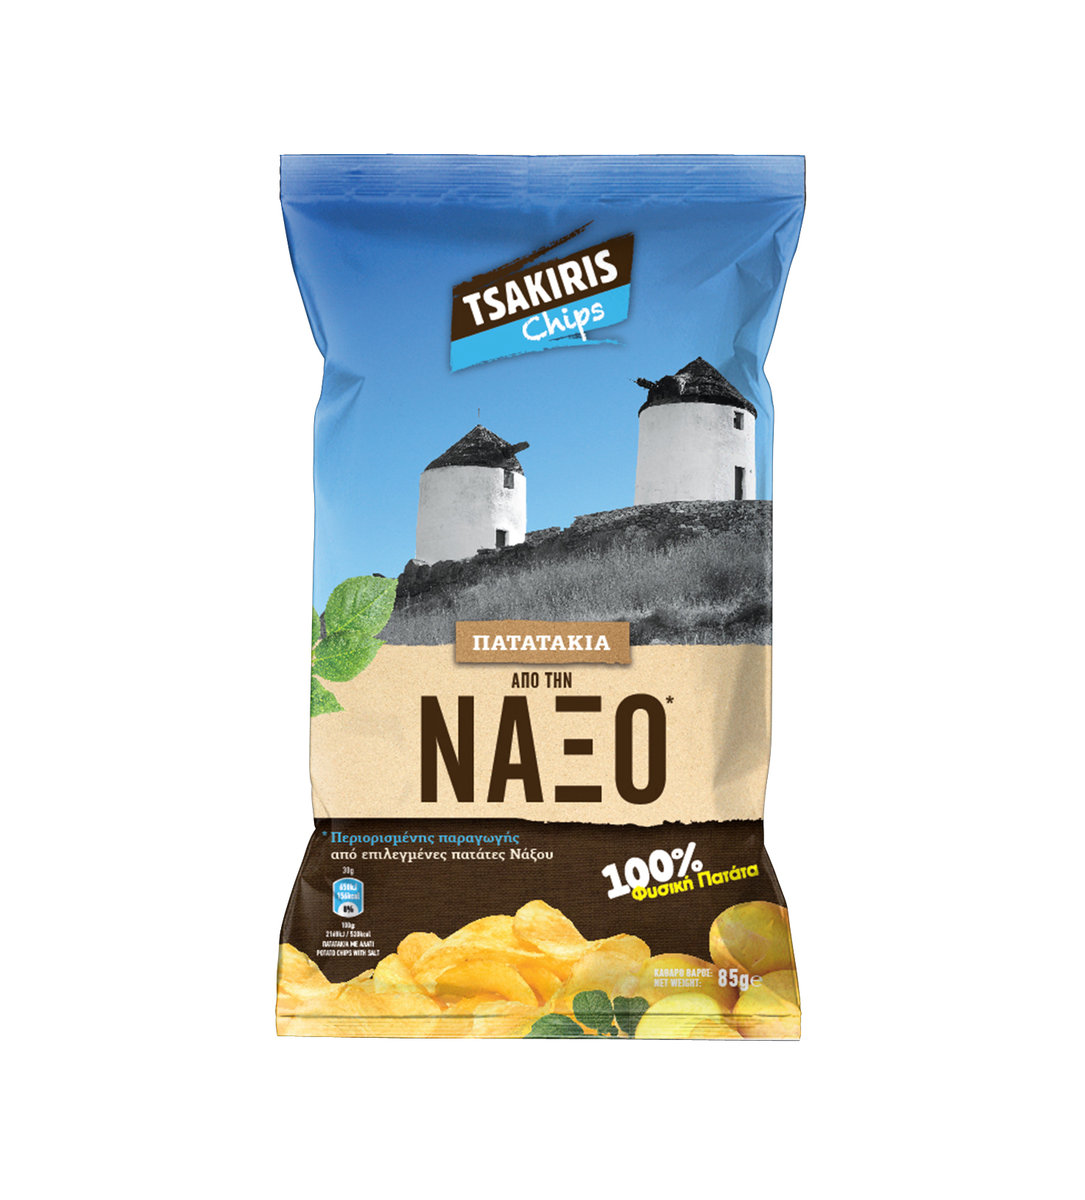 H Τσακίρης καινοτομεί παρουσιάζοντας τα νέα τραγανά chips με 100% φυσική πατάτα από τη Νάξο!